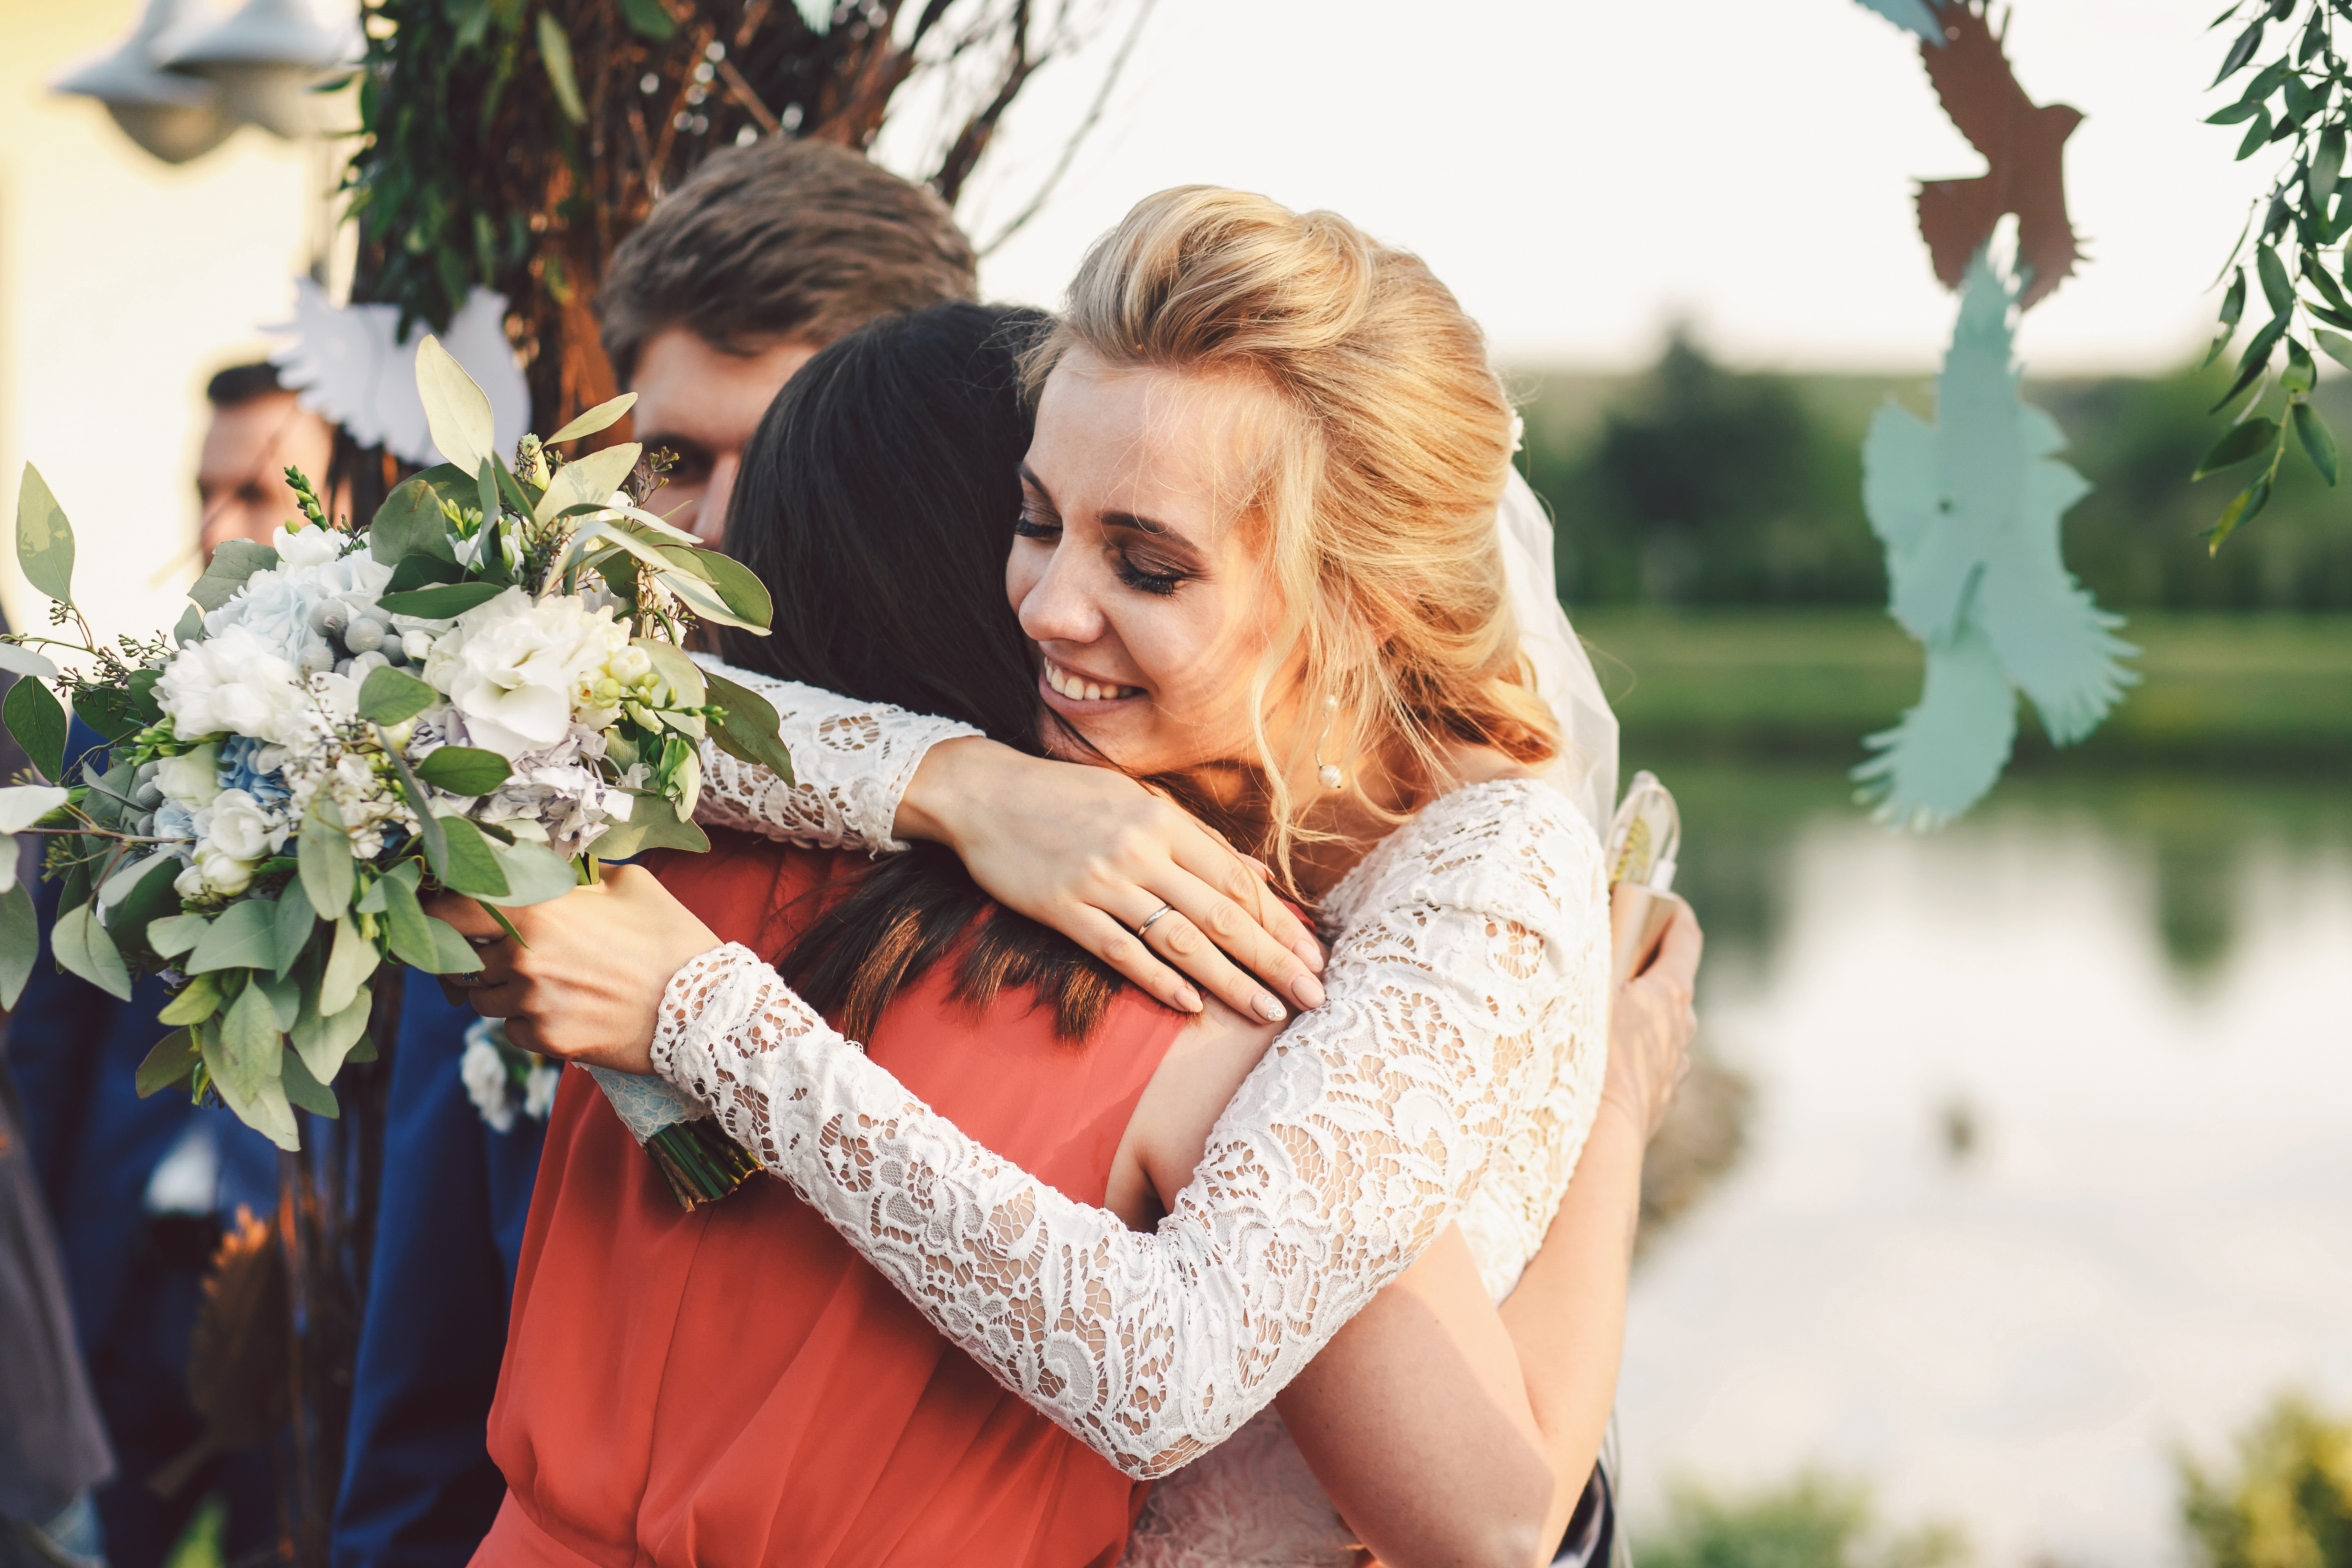 bride hugging a girl friend at her wedding